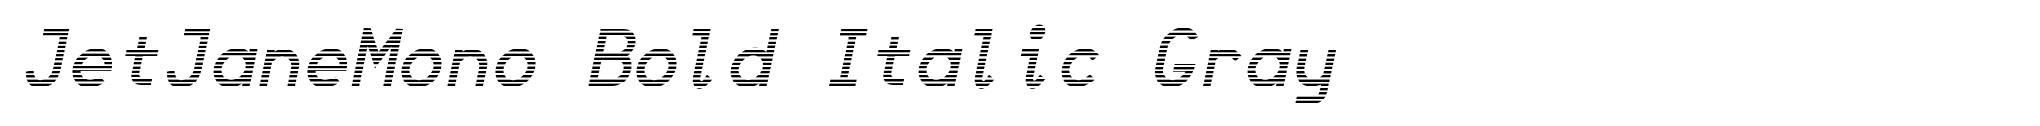 JetJaneMono Bold Italic Gray image